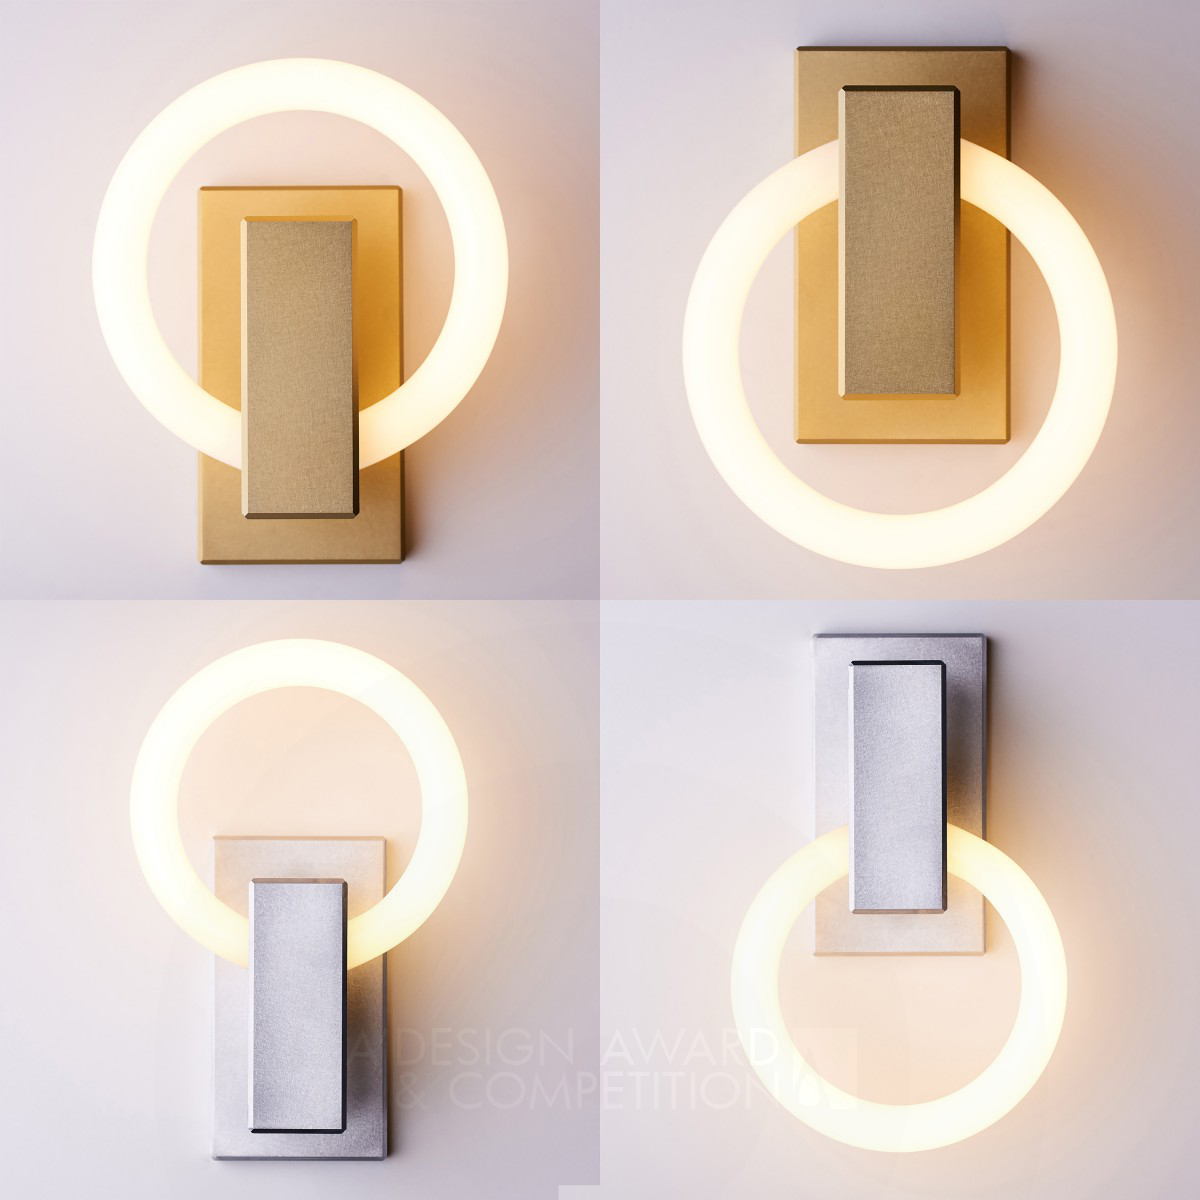 Olah: A Revolutionary Lighting Concept